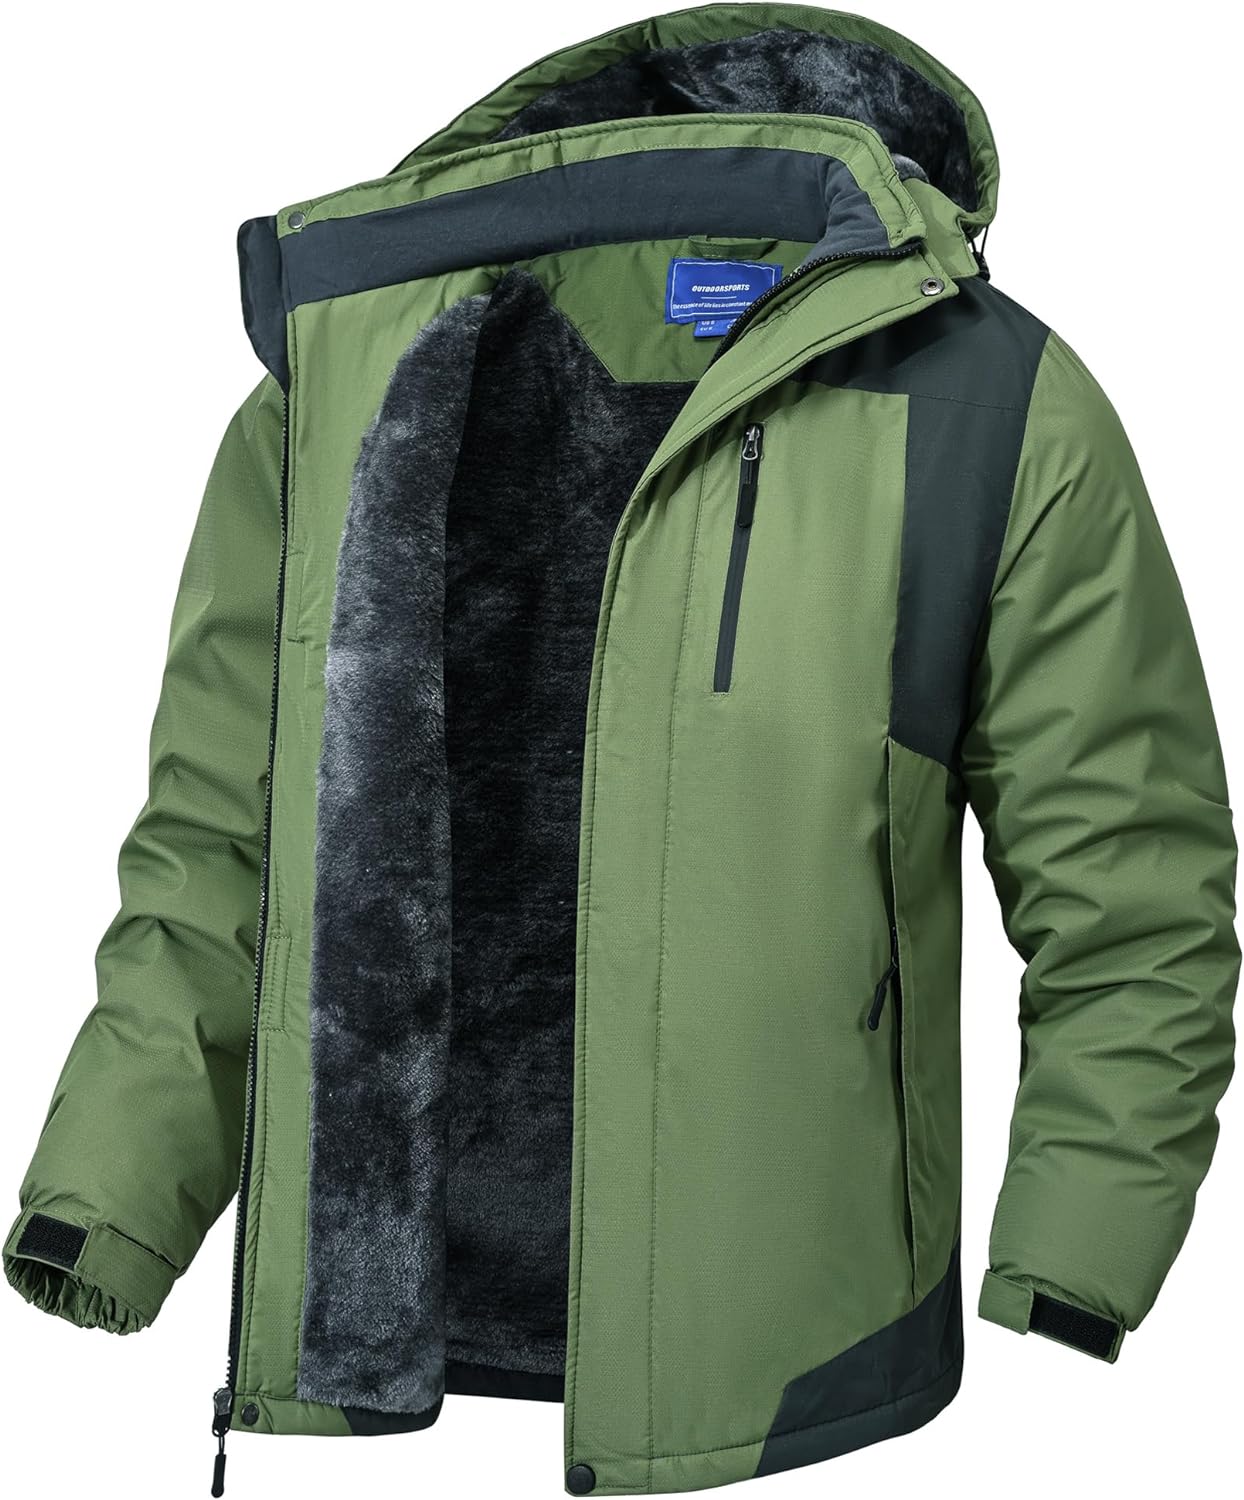 Buy FTIMILD Men's Snow Jacket Waterproof Ski Jackets Windproof Mountain Rain  Jacket Black at Amazon.in